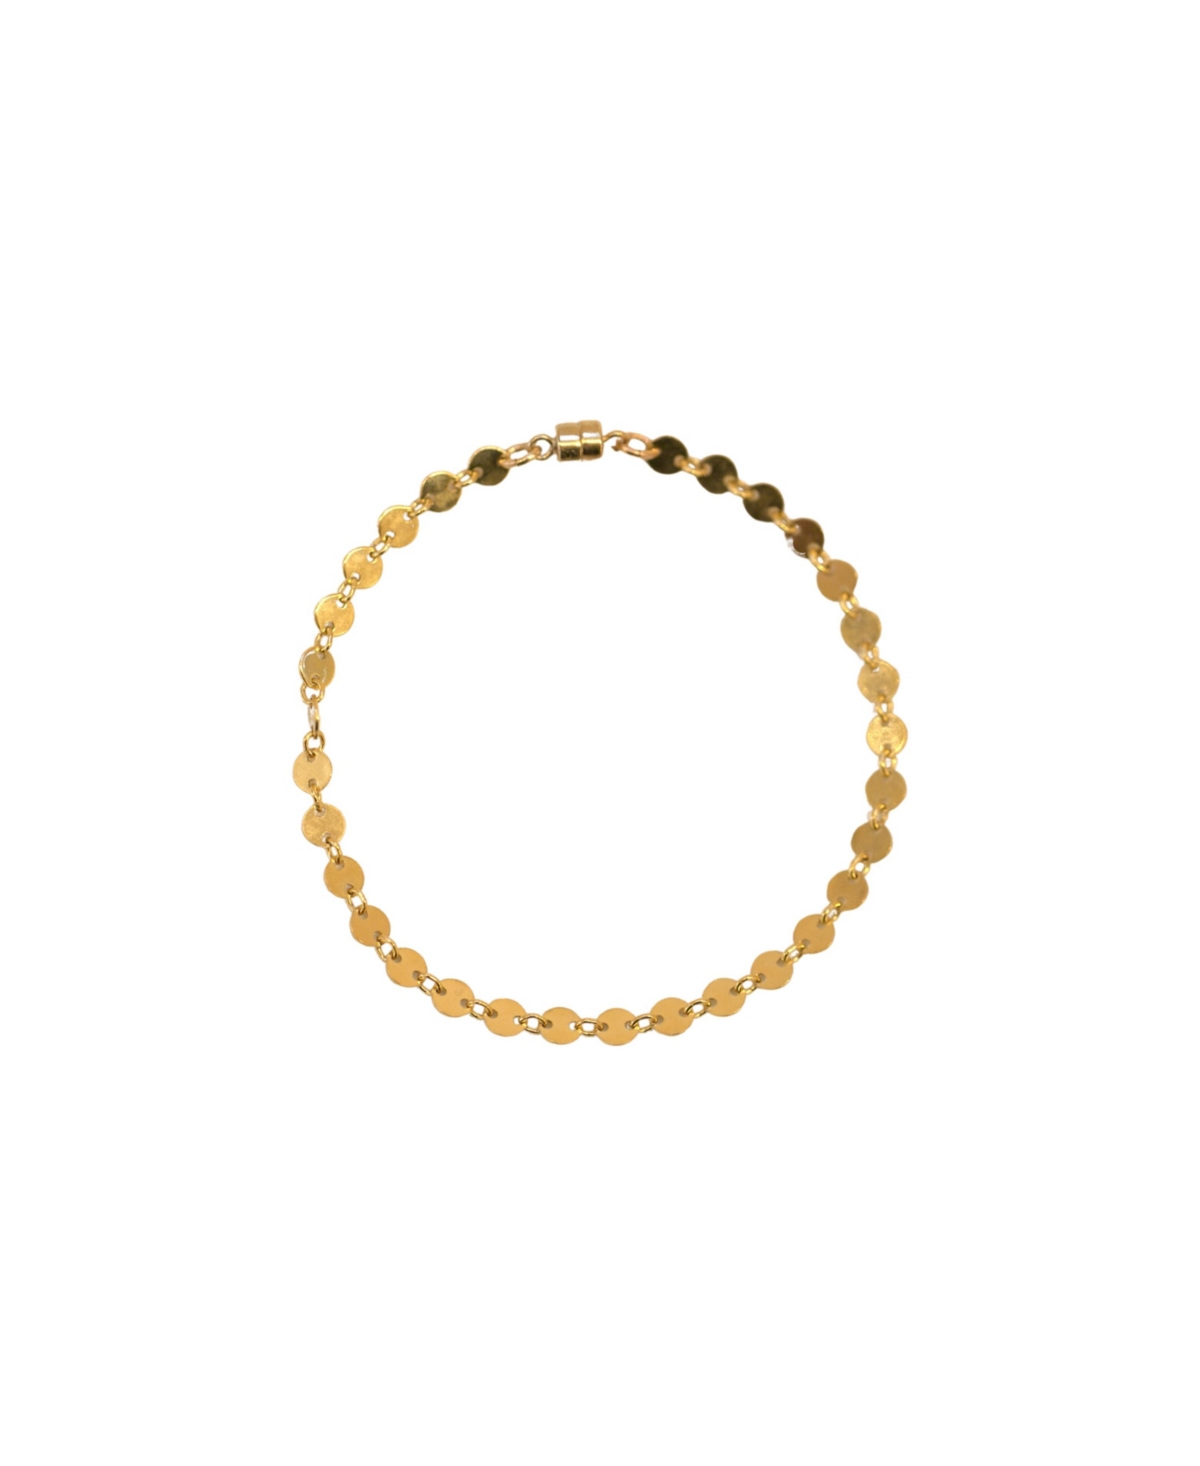 Beck Chain Bracelet - Gold